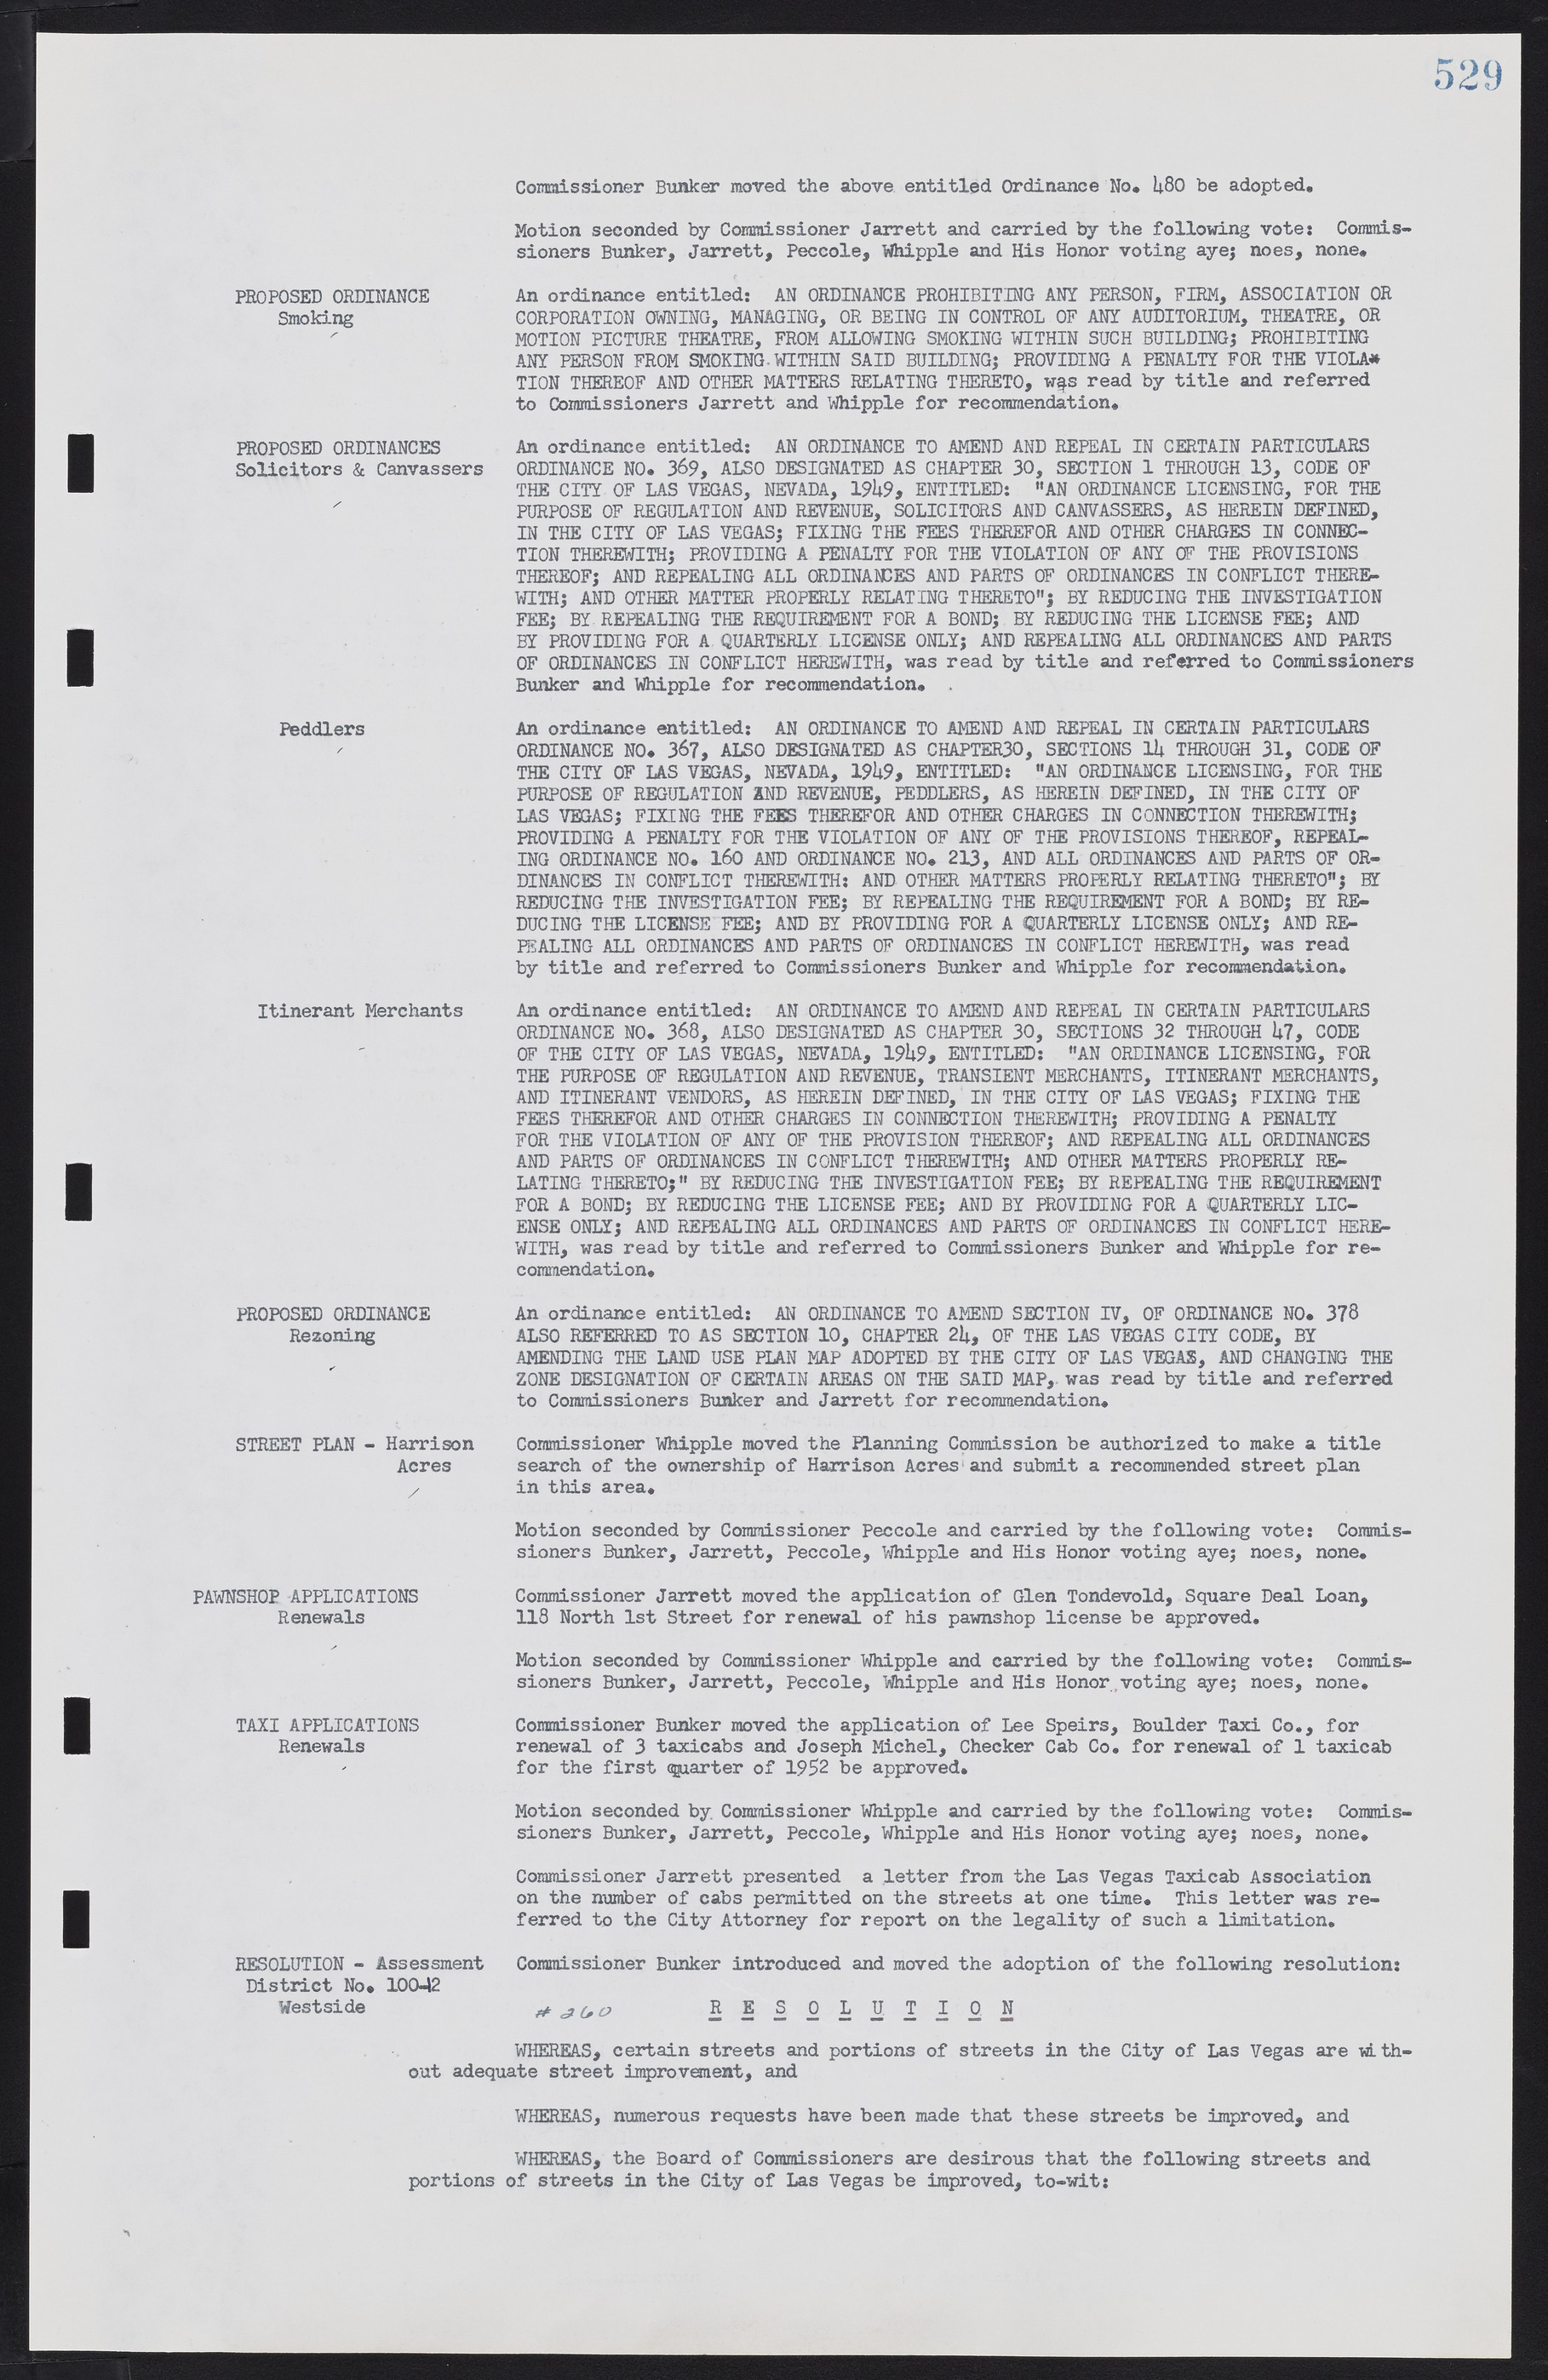 Las Vegas City Commission Minutes, November 7, 1949 to May 21, 1952, lvc000007-547